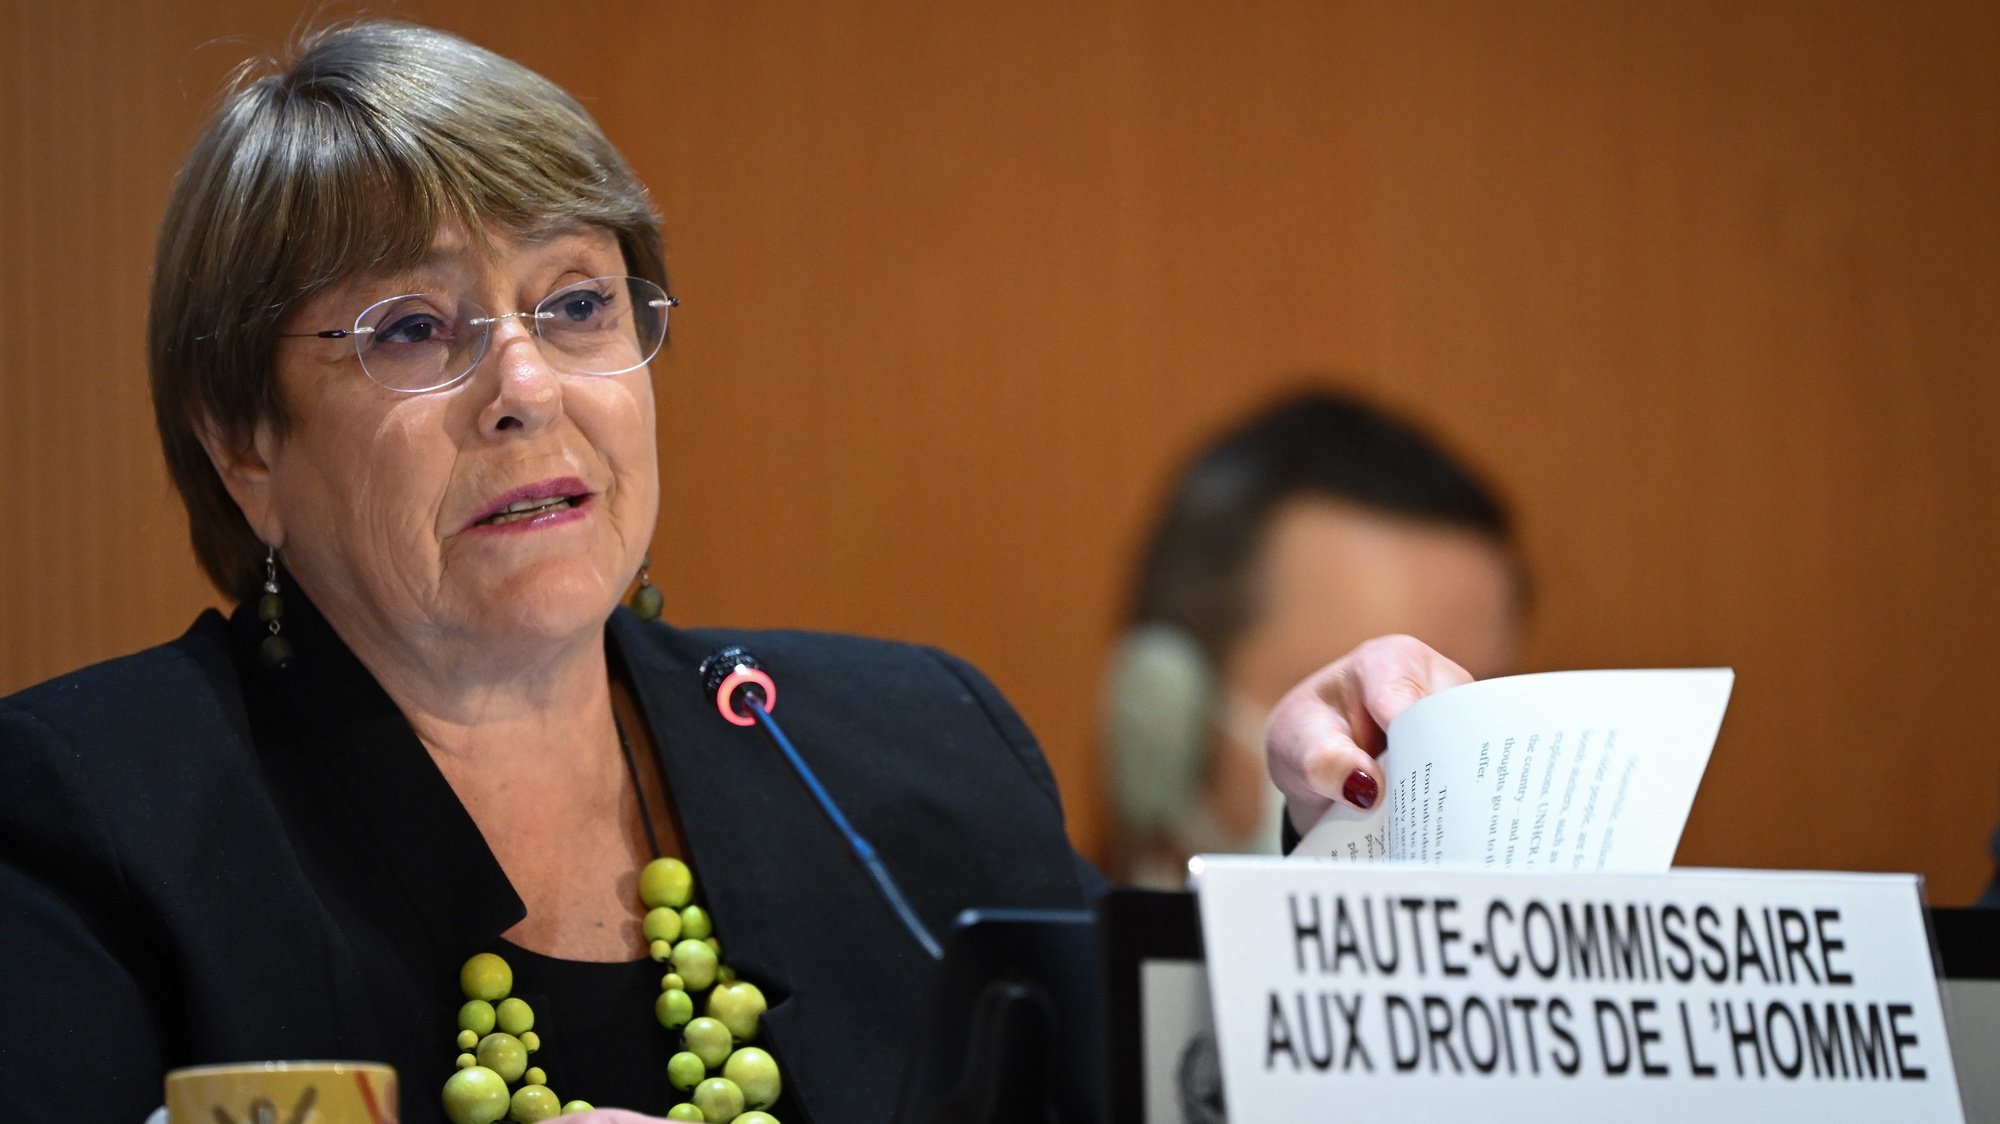 A Alta-Comissária da ONU para os Direitos Humanos, Michelle Bachelet